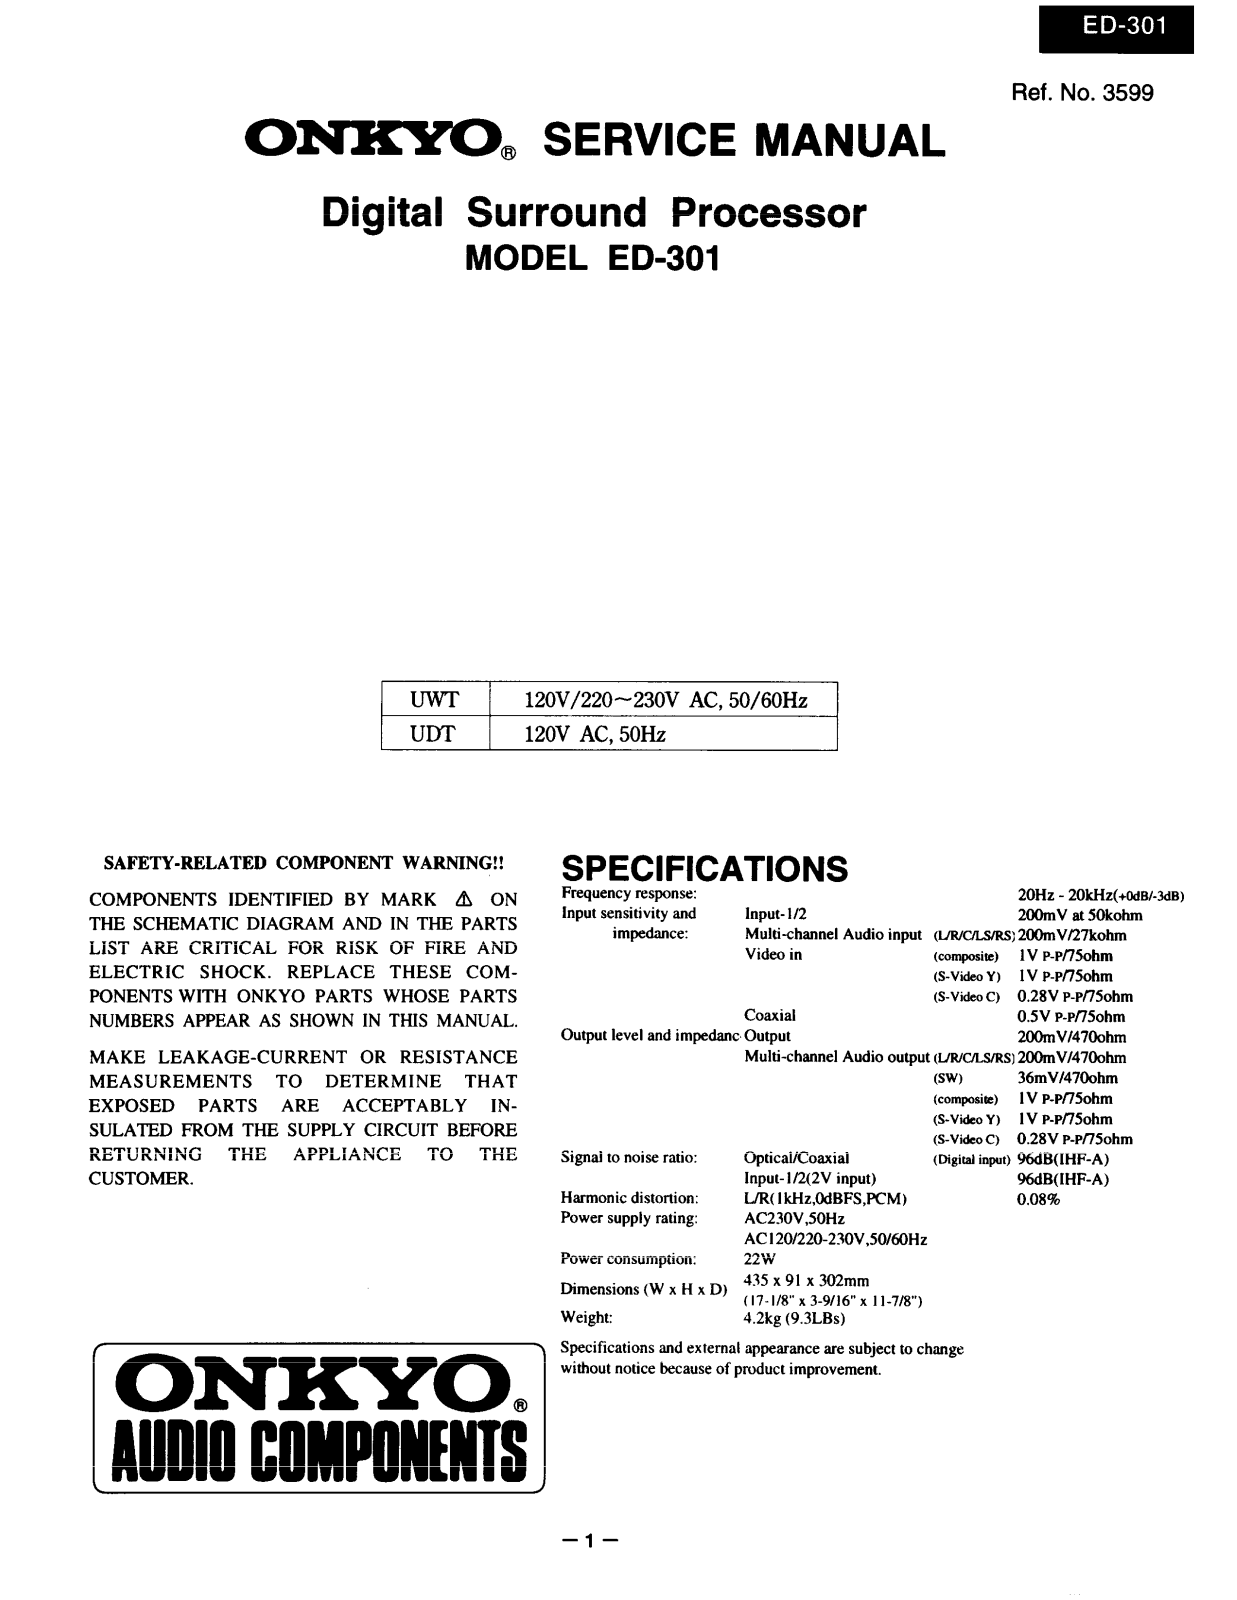 Onkyo ED-301 Service manual